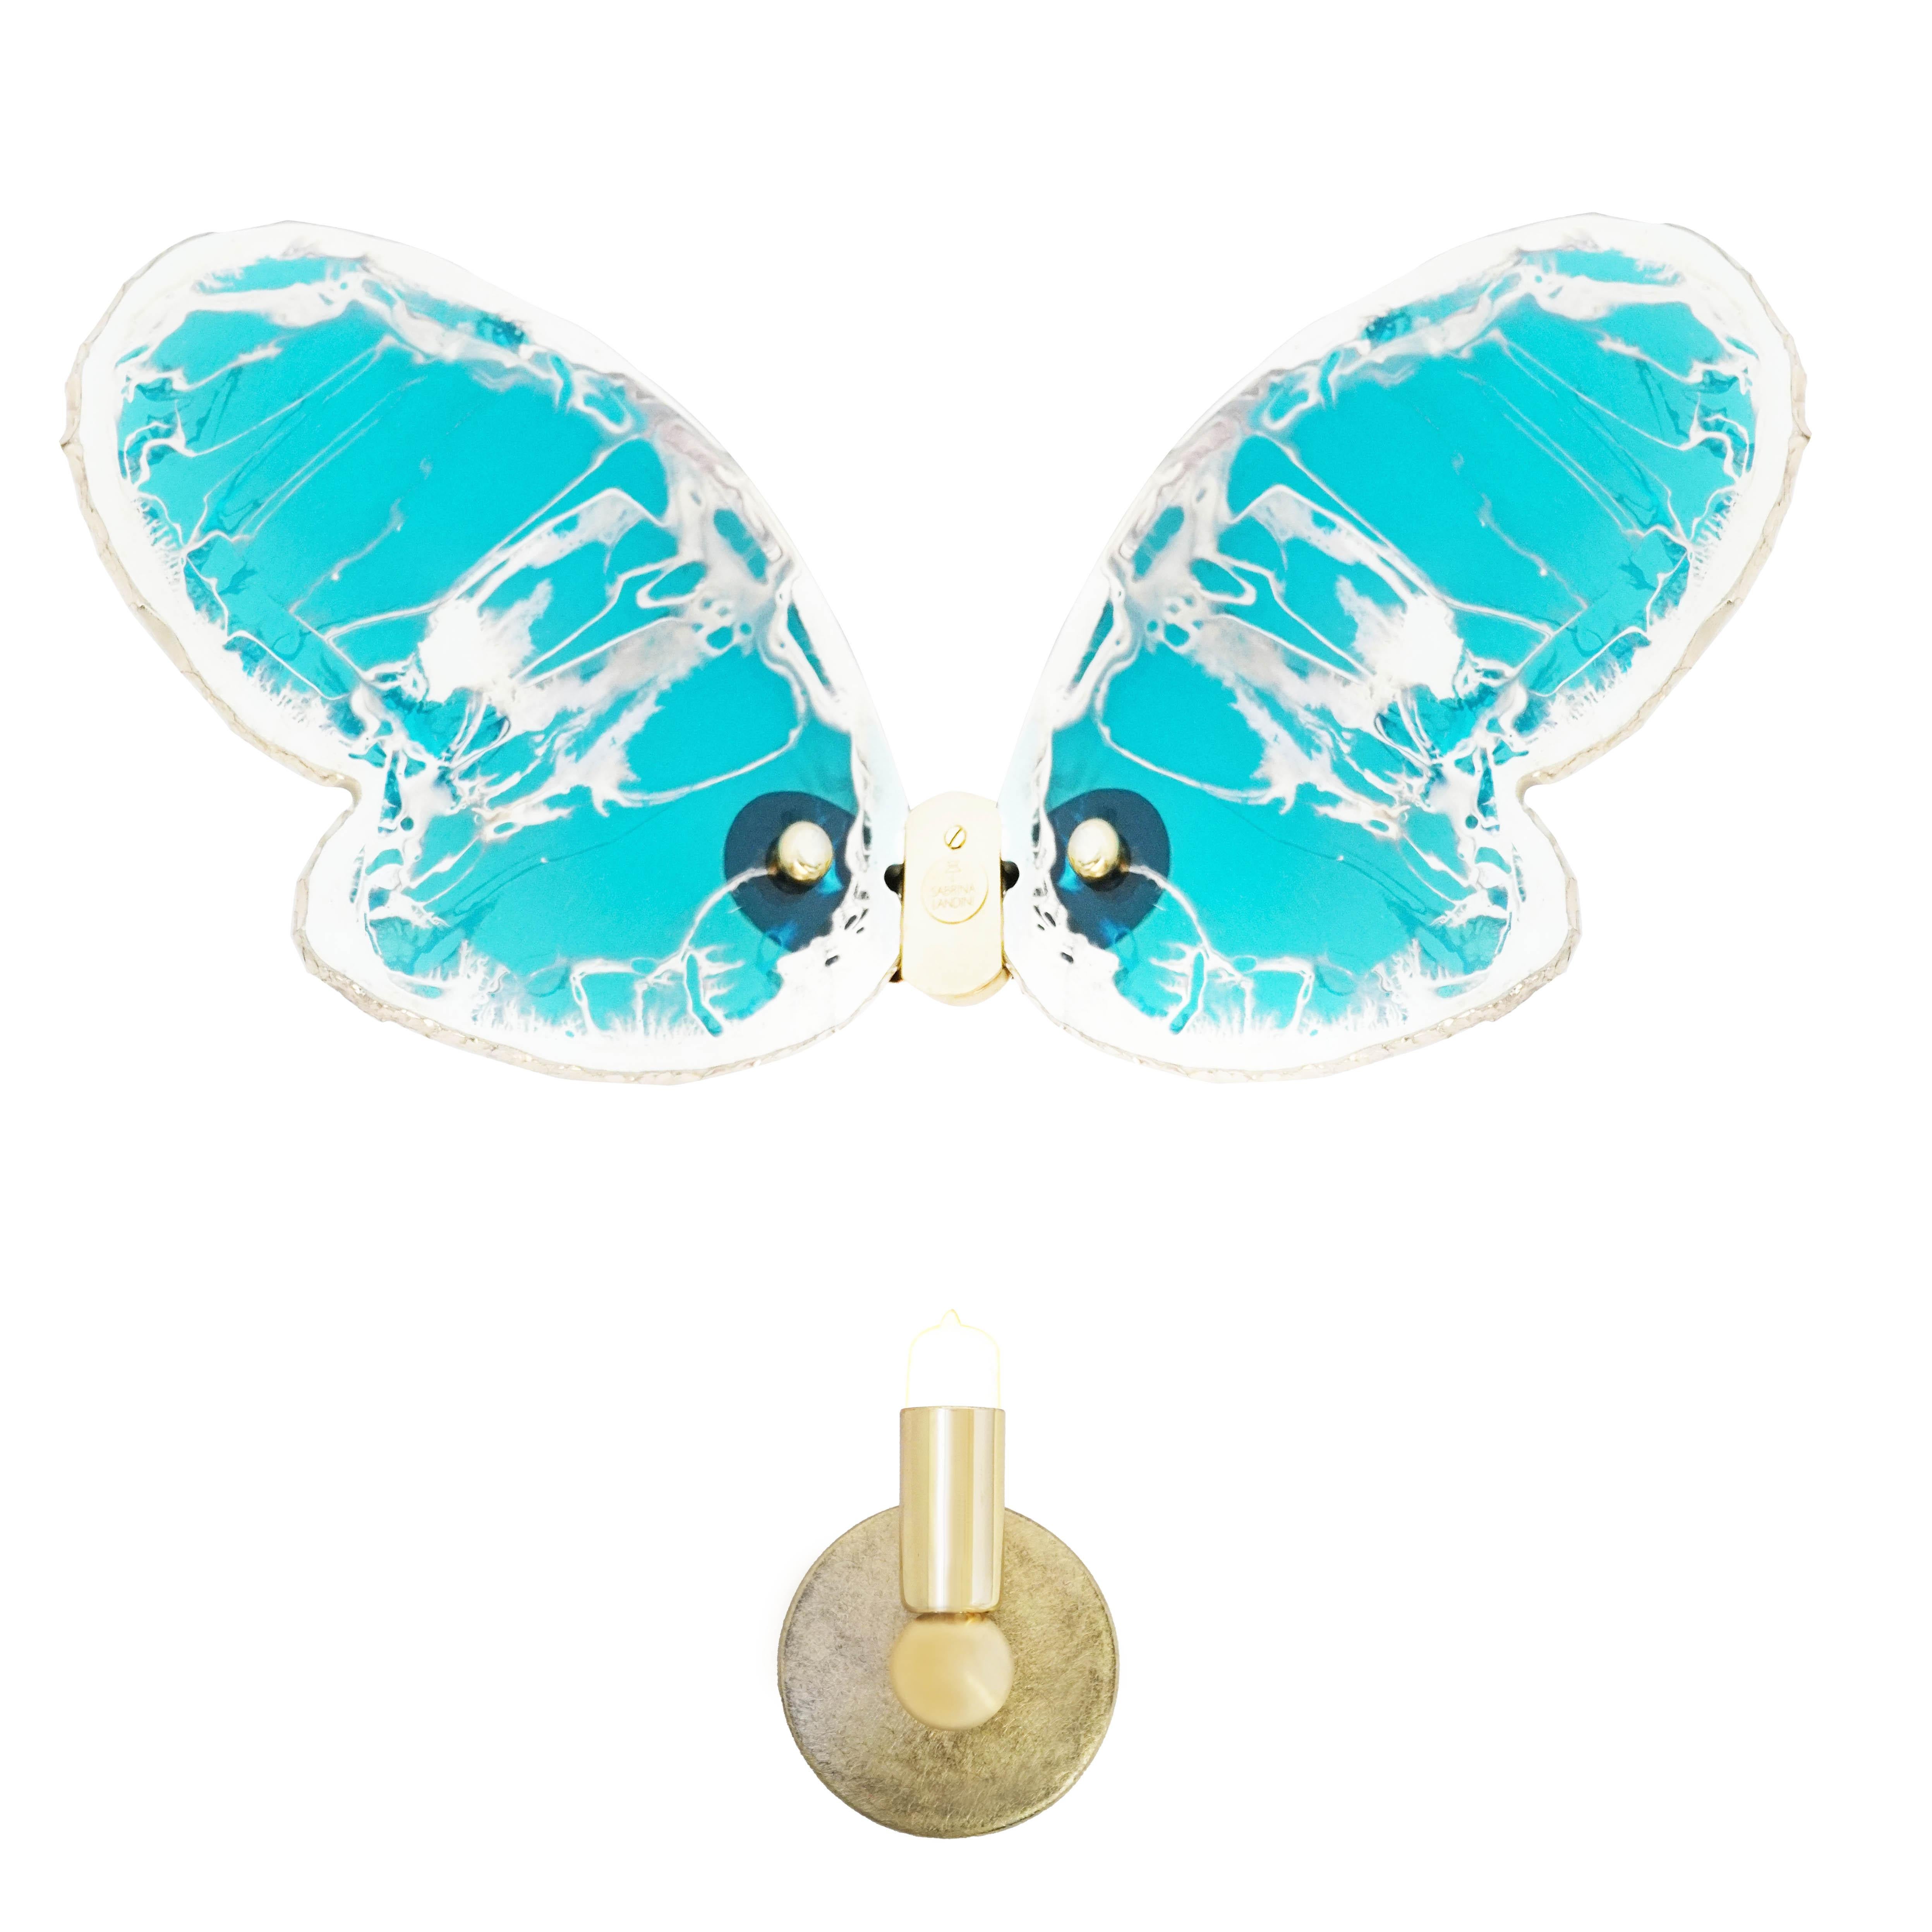 Butterfly Contemporary Wall Flight Sculpture, Art Silvered Glass Aquamarine  